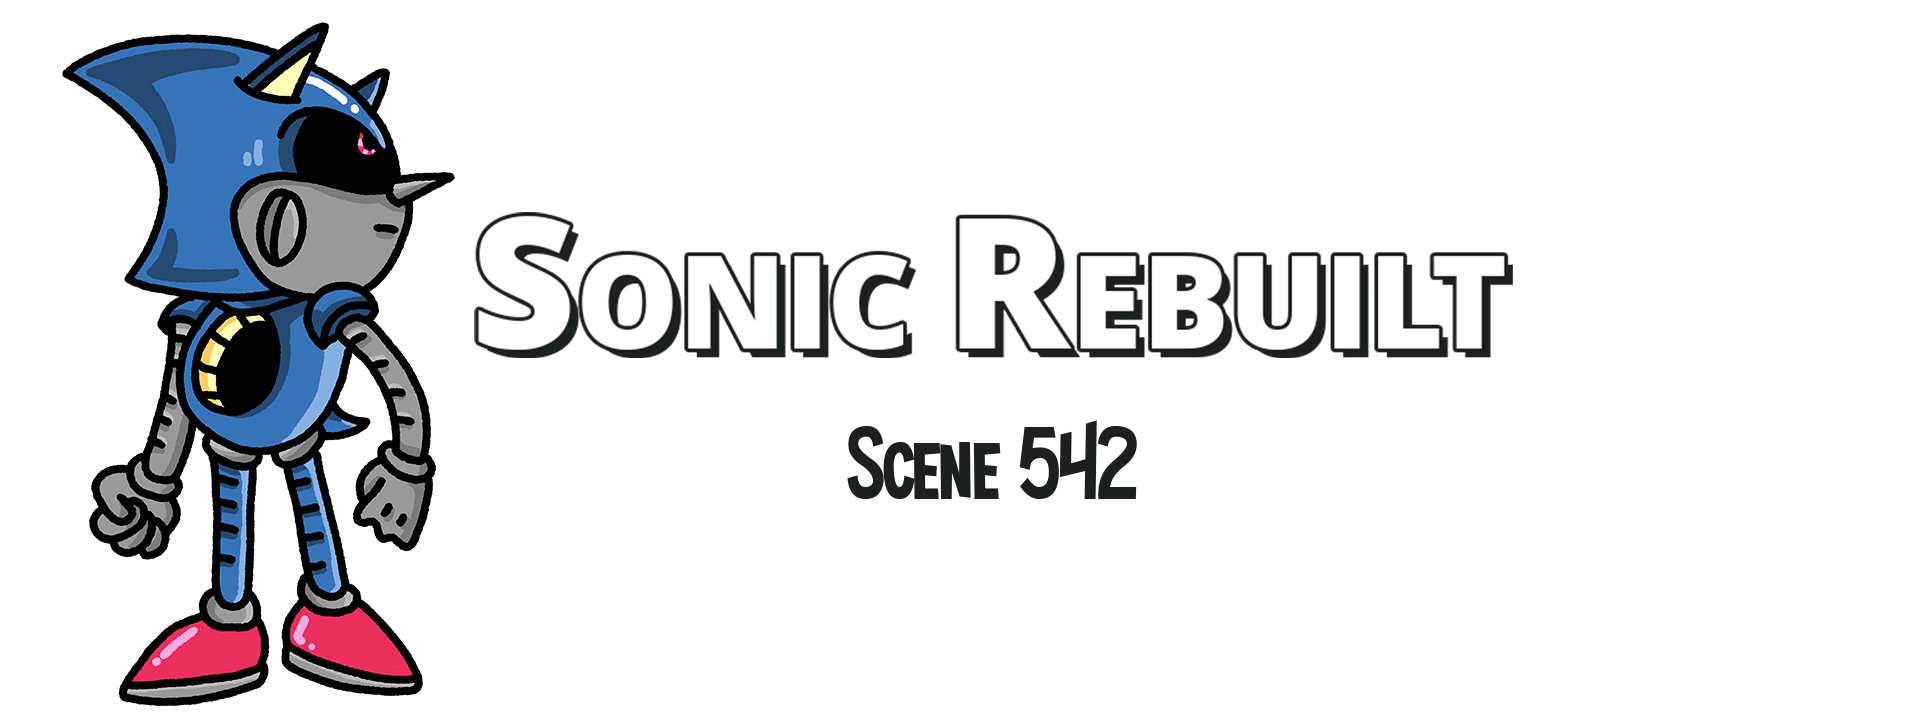 SONIC REBUILT - SCENE 542